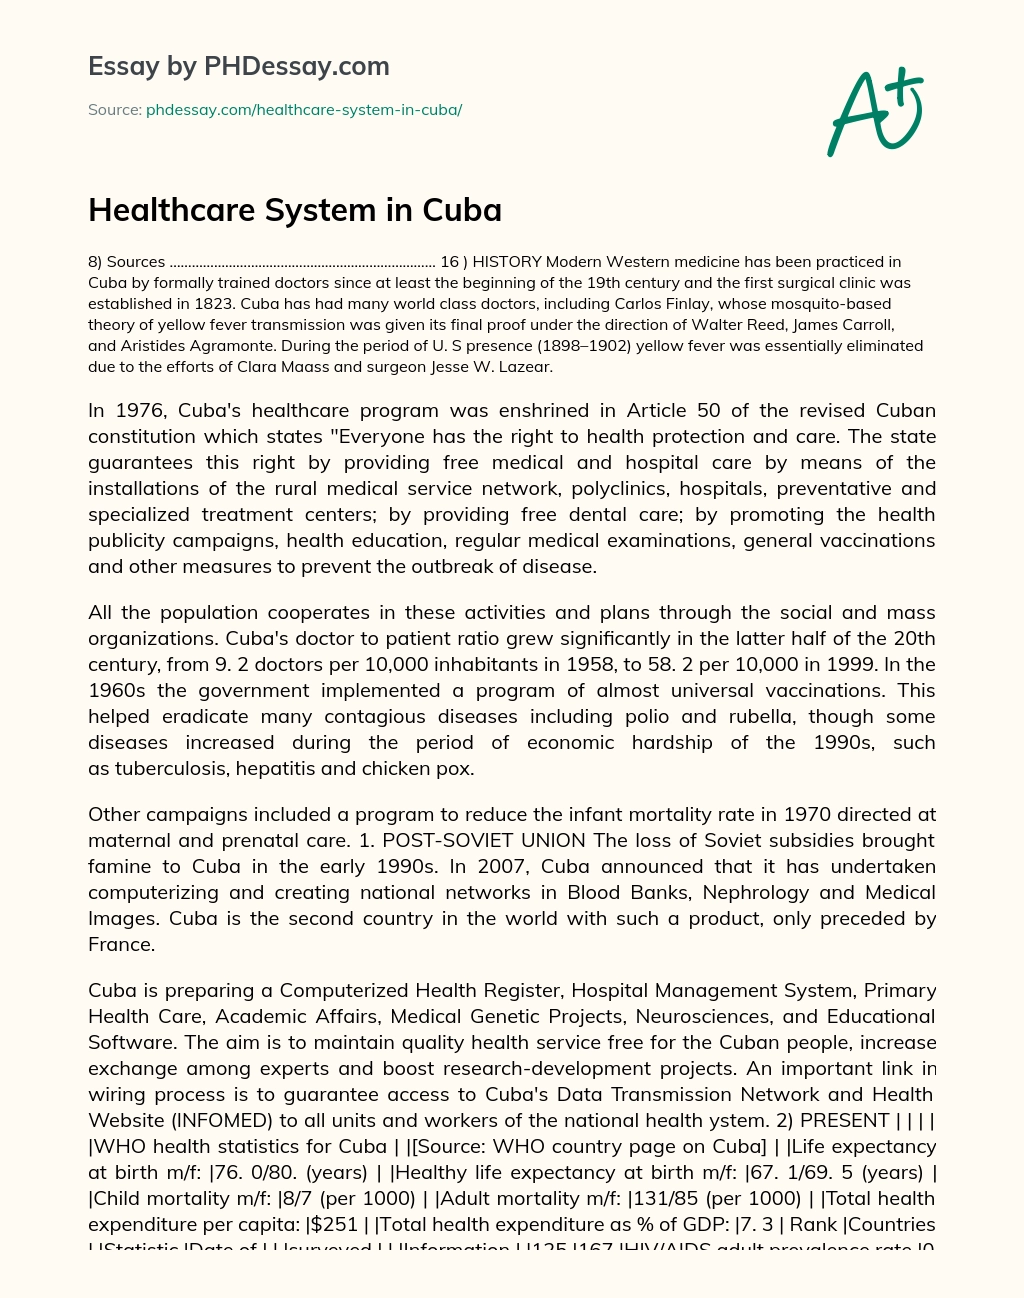 Healthcare System in Cuba essay